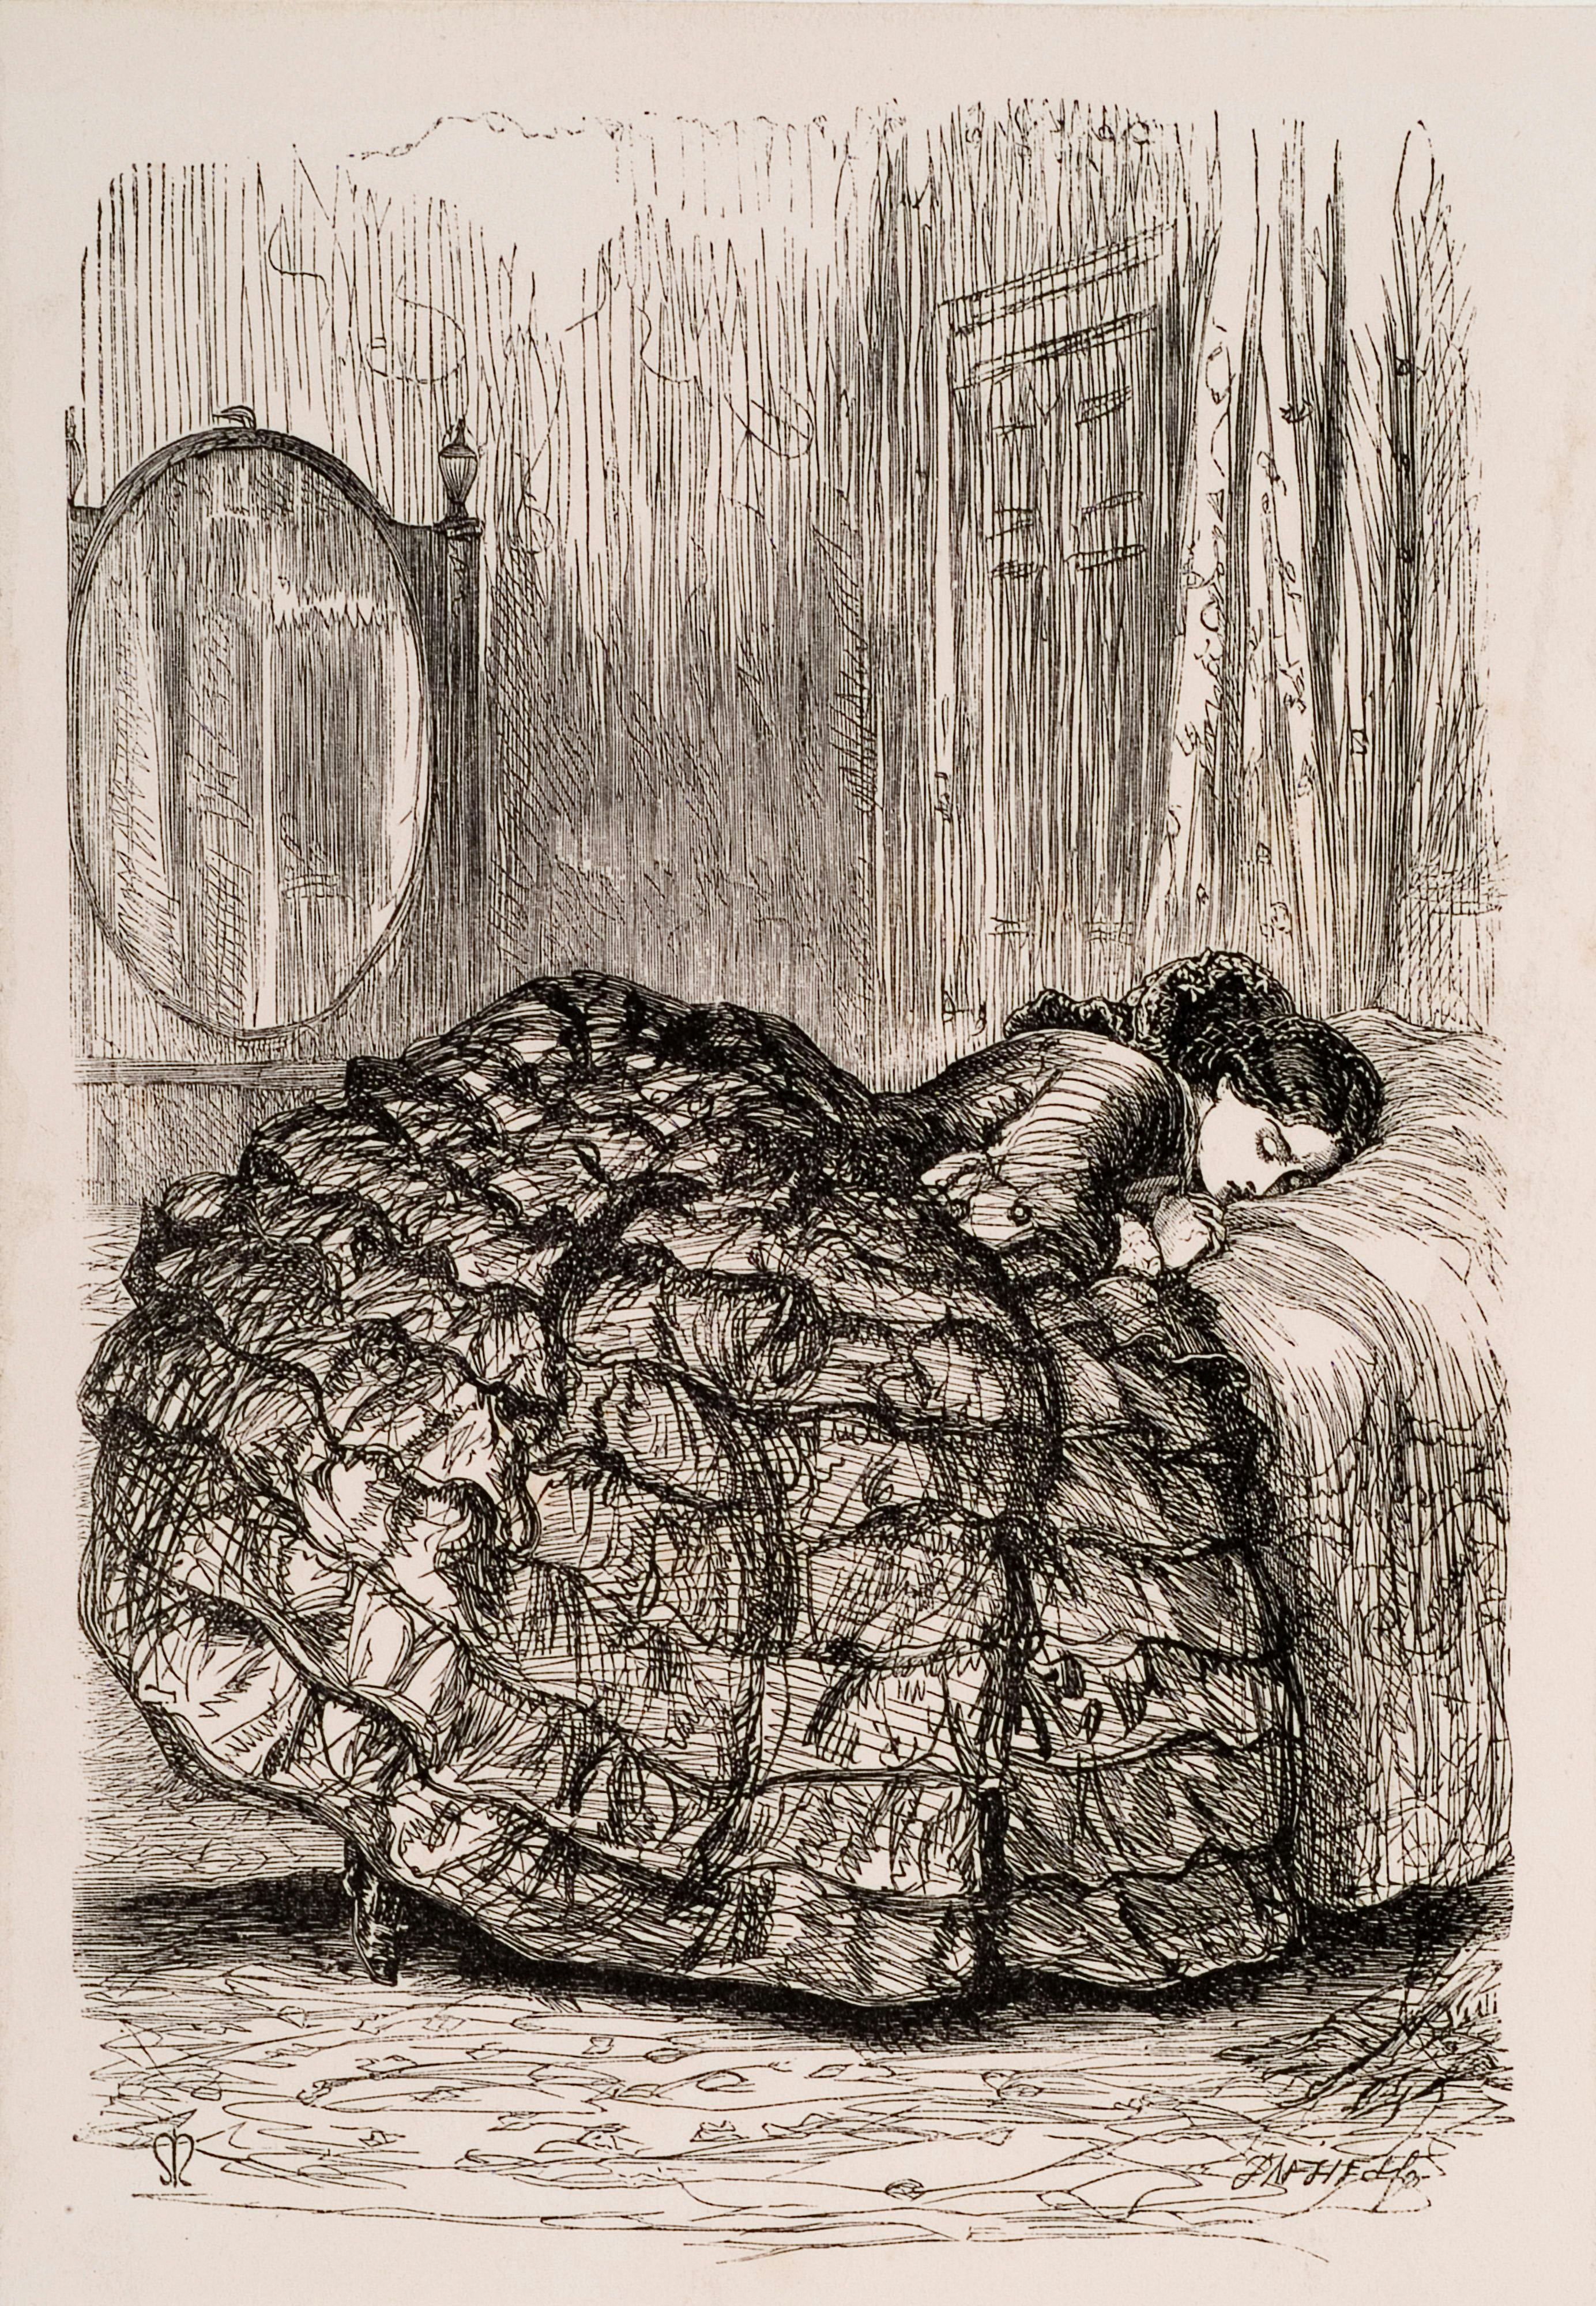 Framley Parsonage - Was it not a Lie?,1860. John Everett Millais (d.1896) and Dalziel Brothers